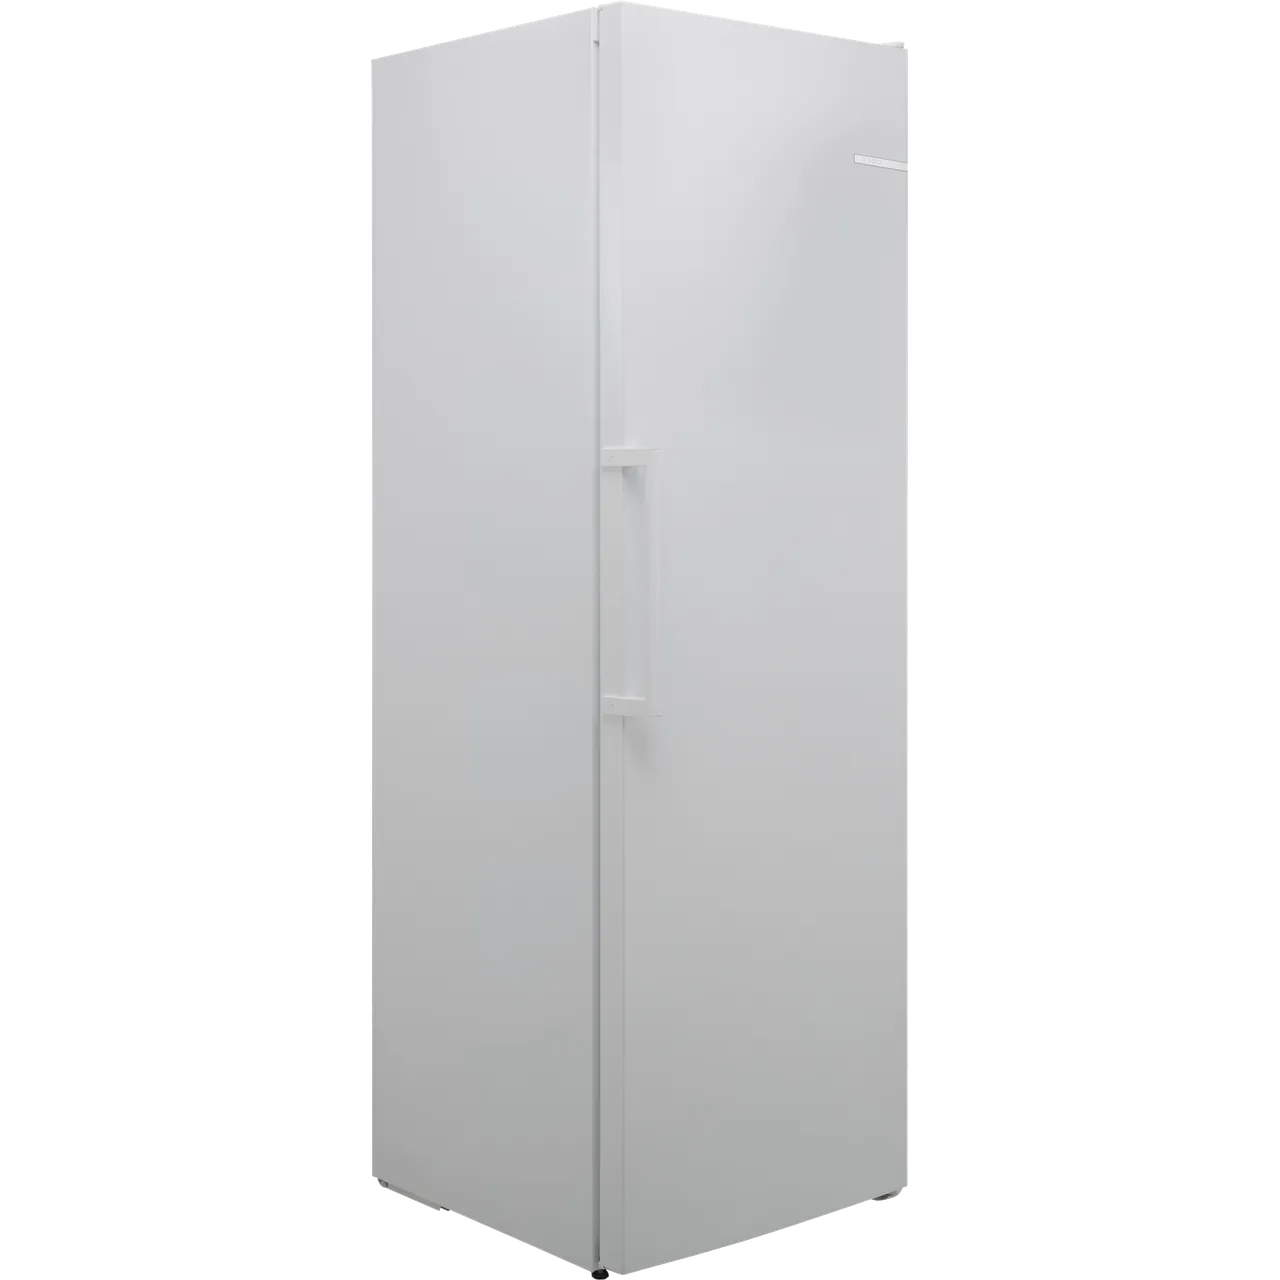 Bosch GSN36VWFPG Free Standing Freezer White